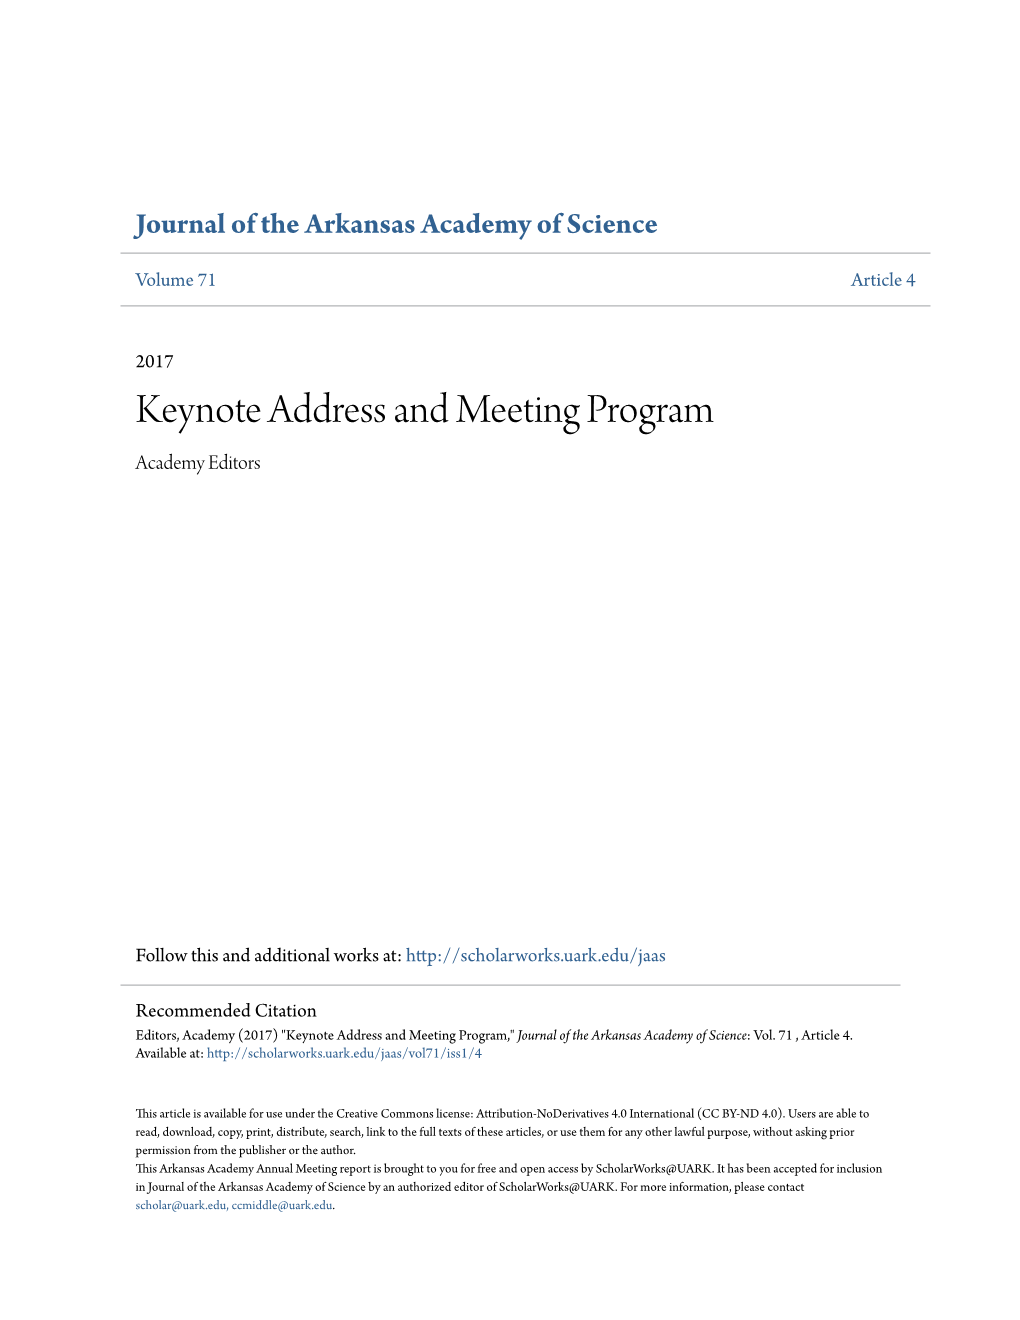 Keynote Address and Meeting Program Academy Editors